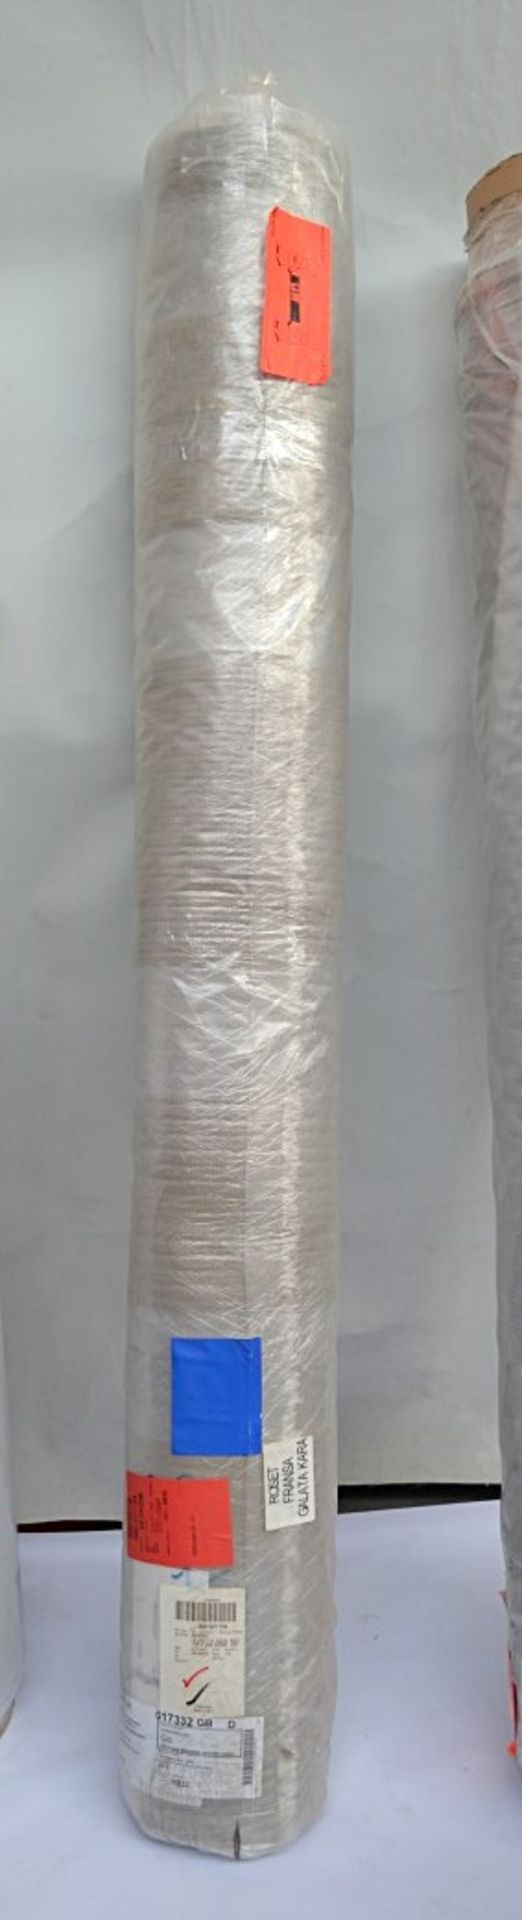 1 x LIGNE ROSET Soft Et Doux Crème Rug (Soft And Gentle Rug) - Dimensions: 250x200cm - Ref: 4555334B - Image 4 of 7